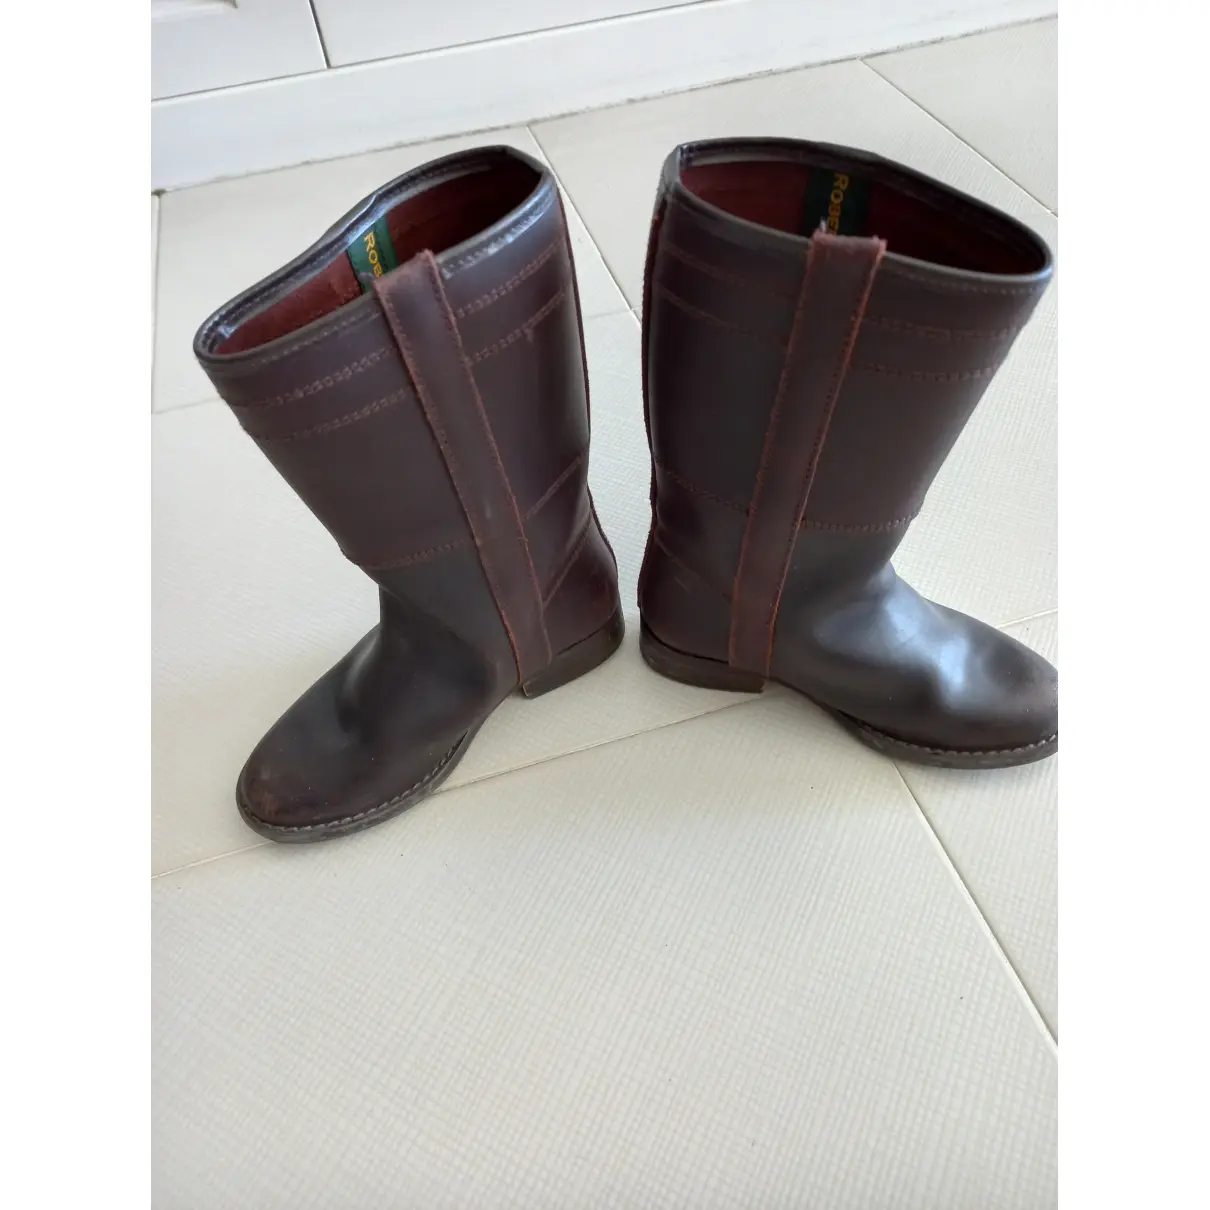 Buy Valverde del Camino Leather boots online